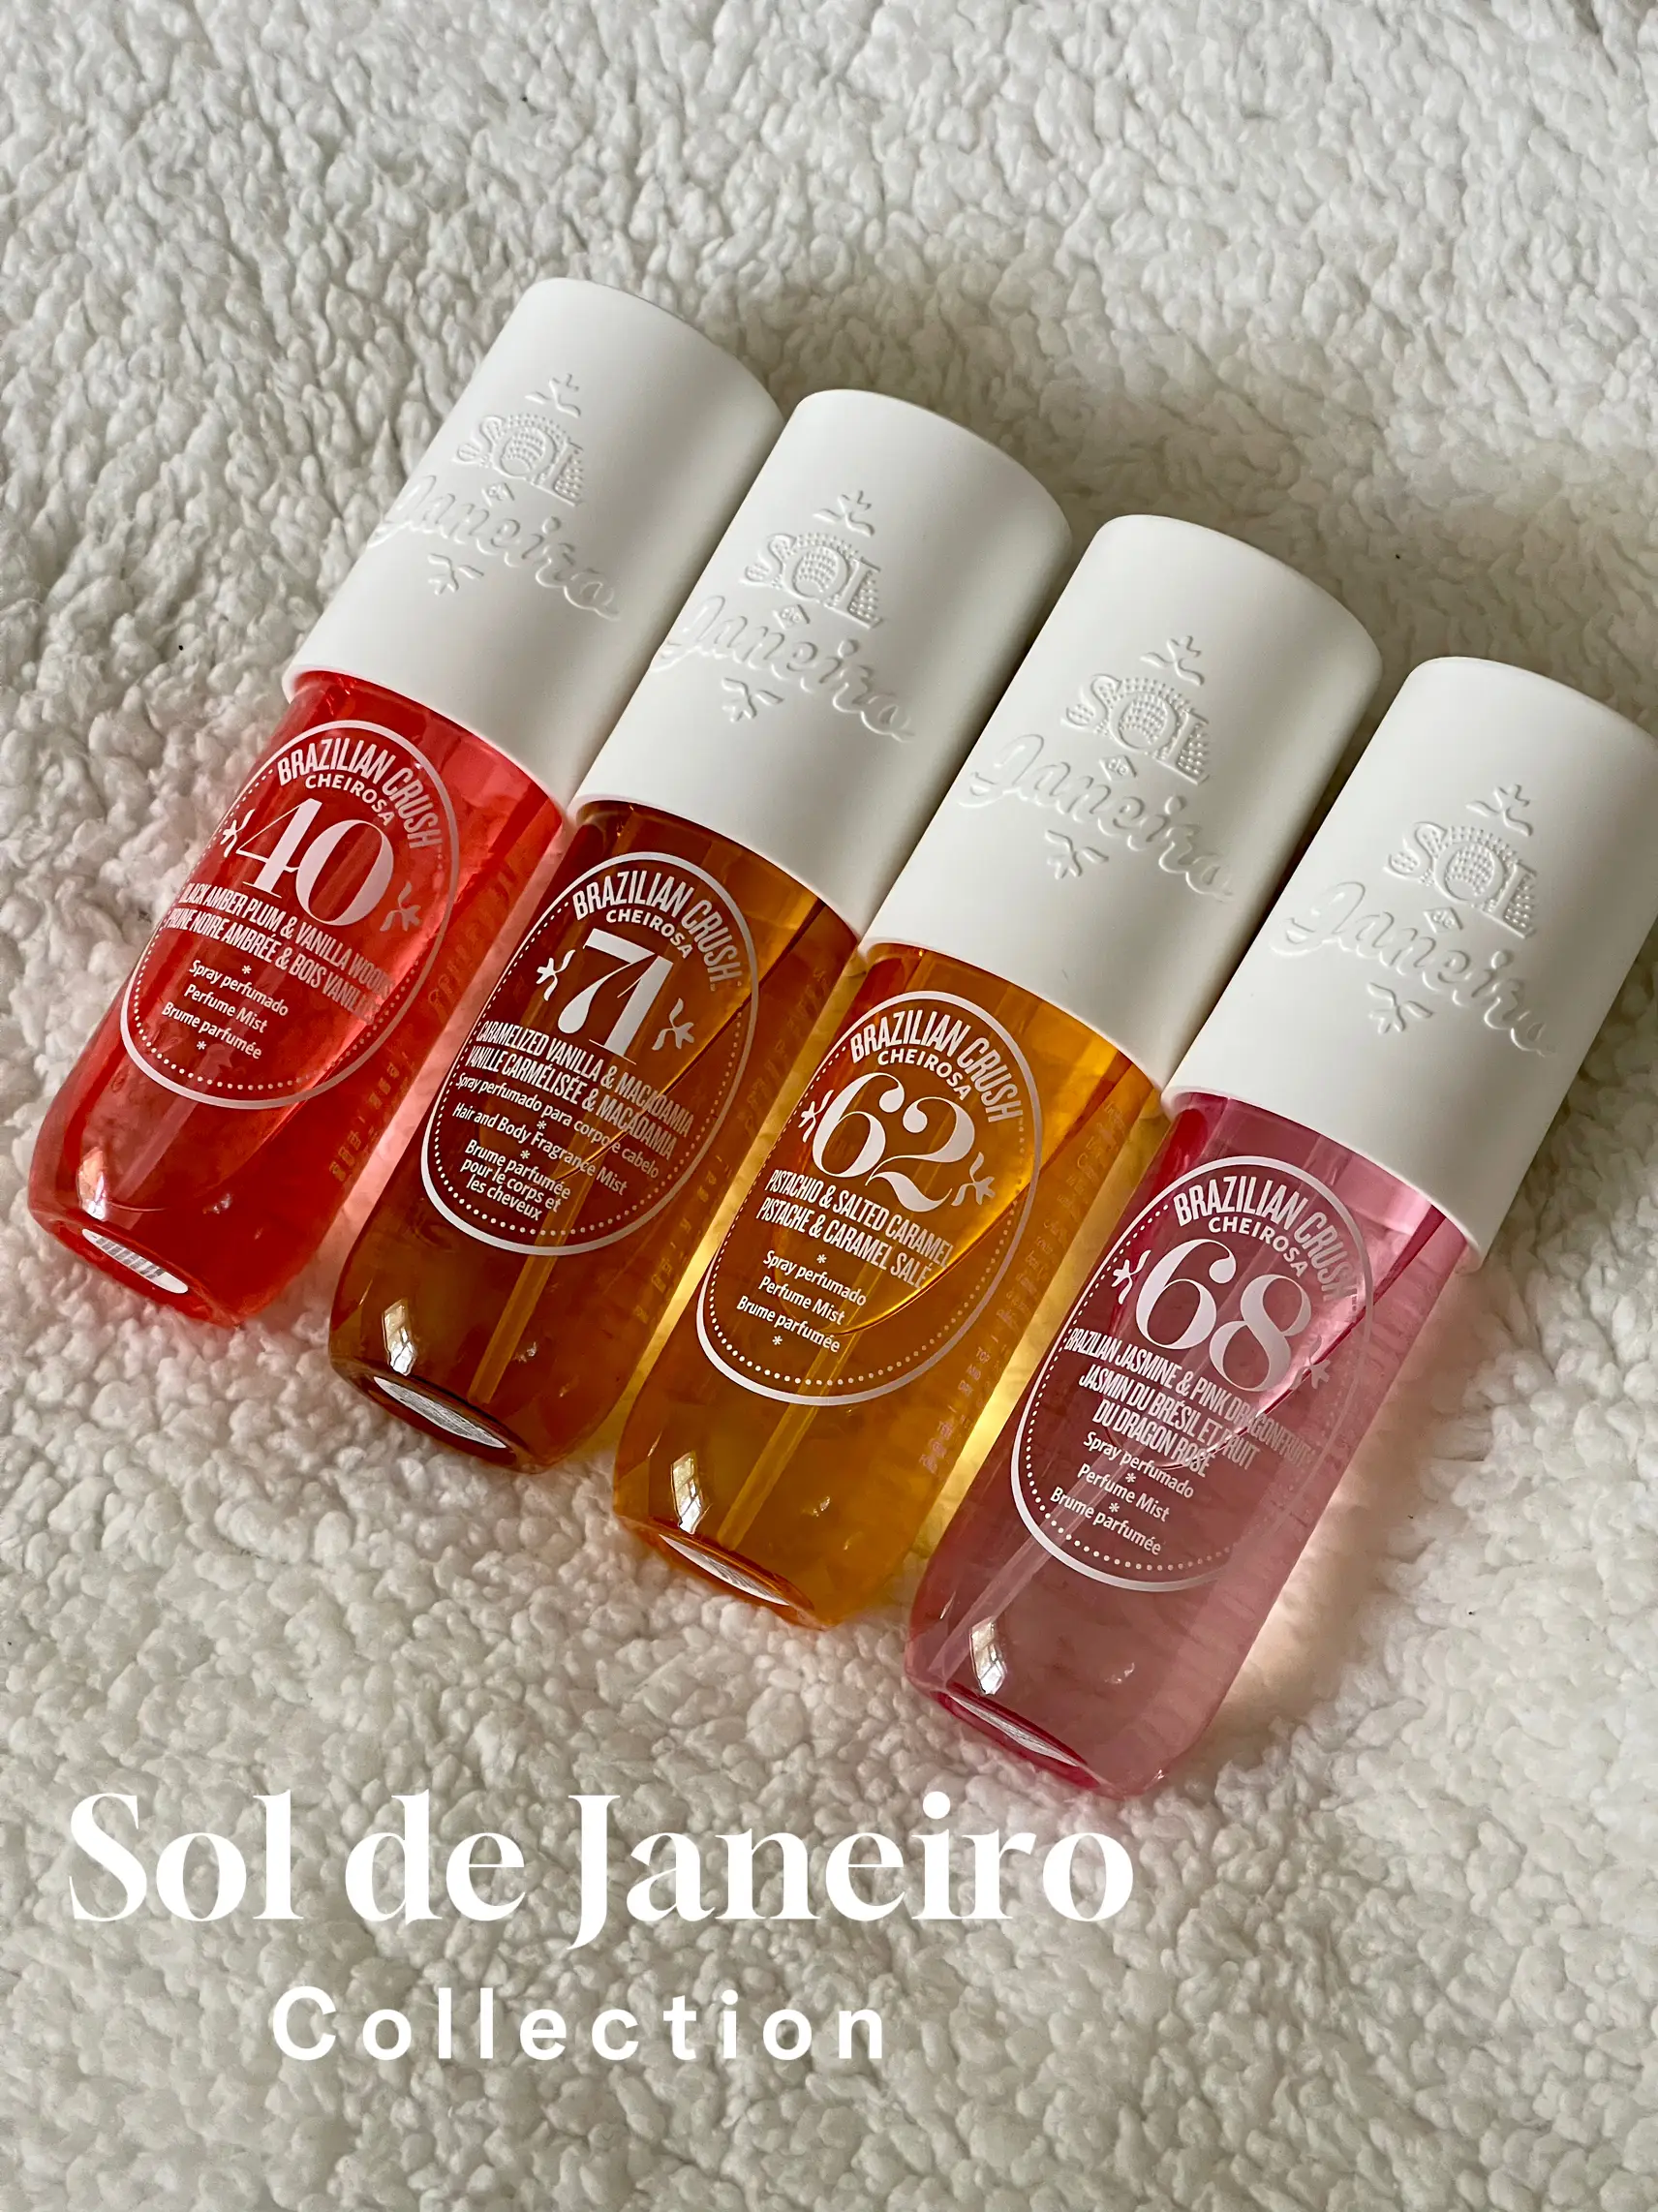 SOL DE JANEIRO Cheirosa '68 Hair & Body Fragrance Mist Full Size and Travel  Size Set